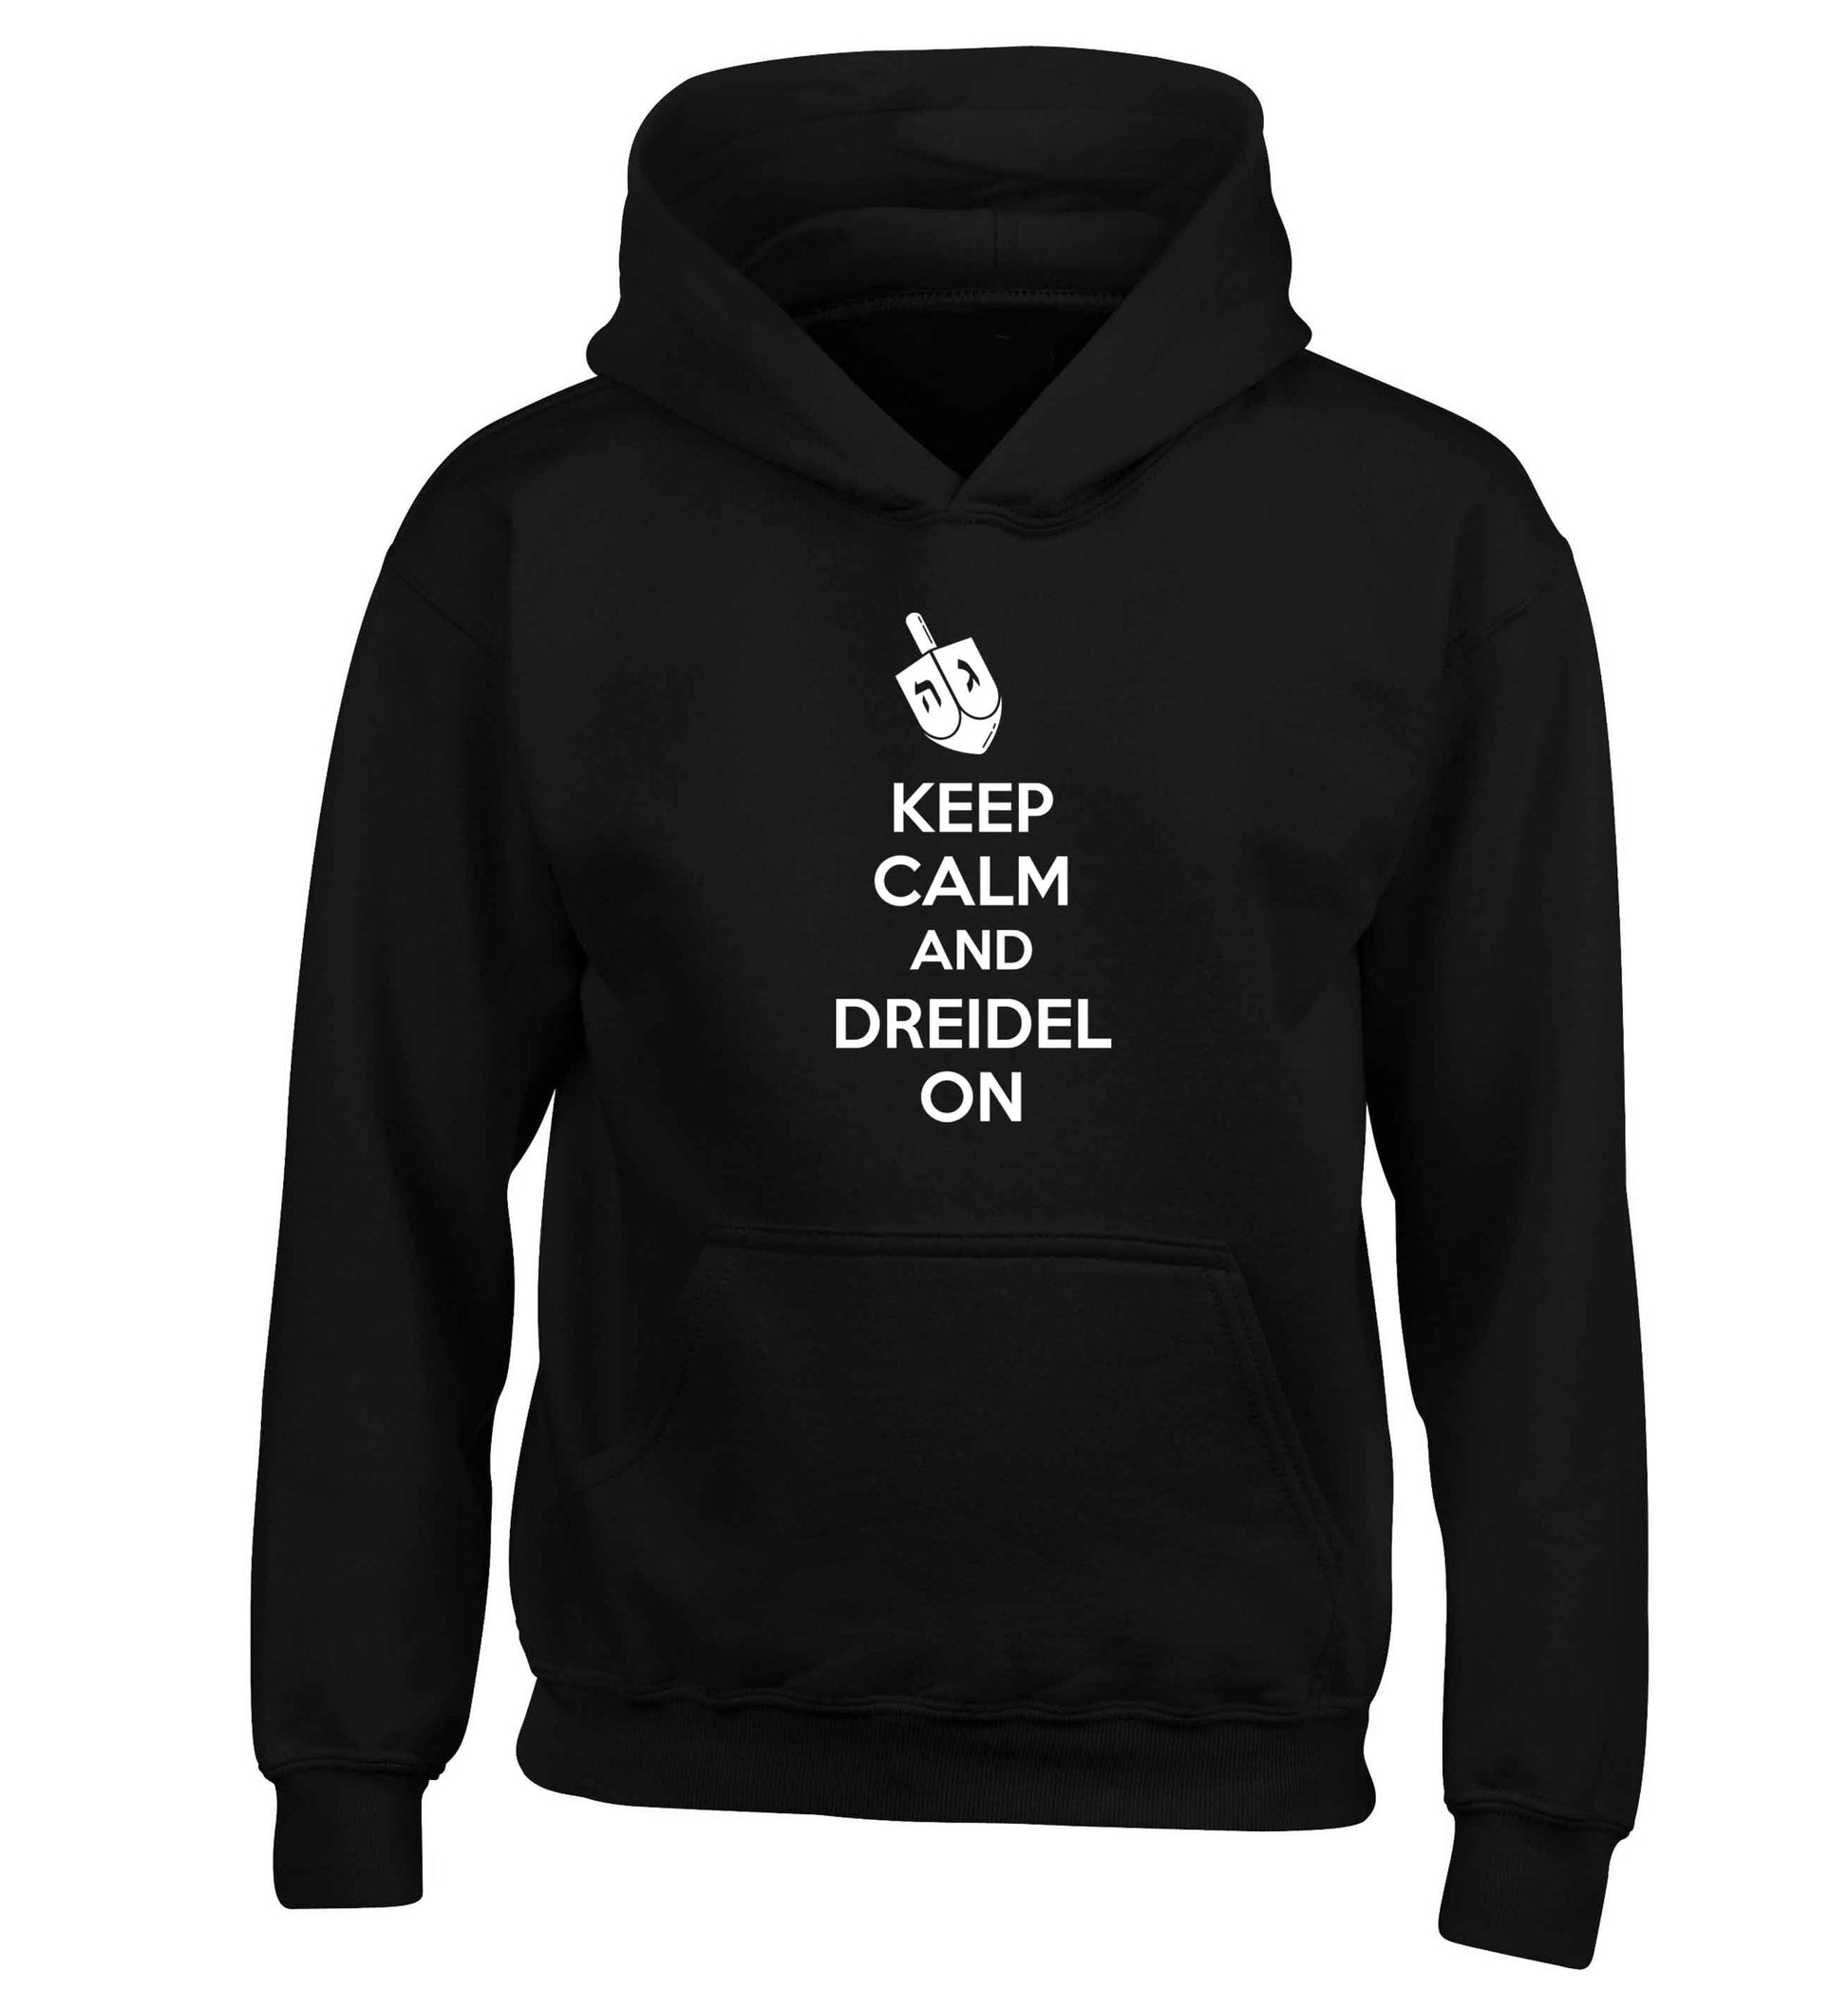 Keep calm and dreidel on children's black hoodie 12-13 Years